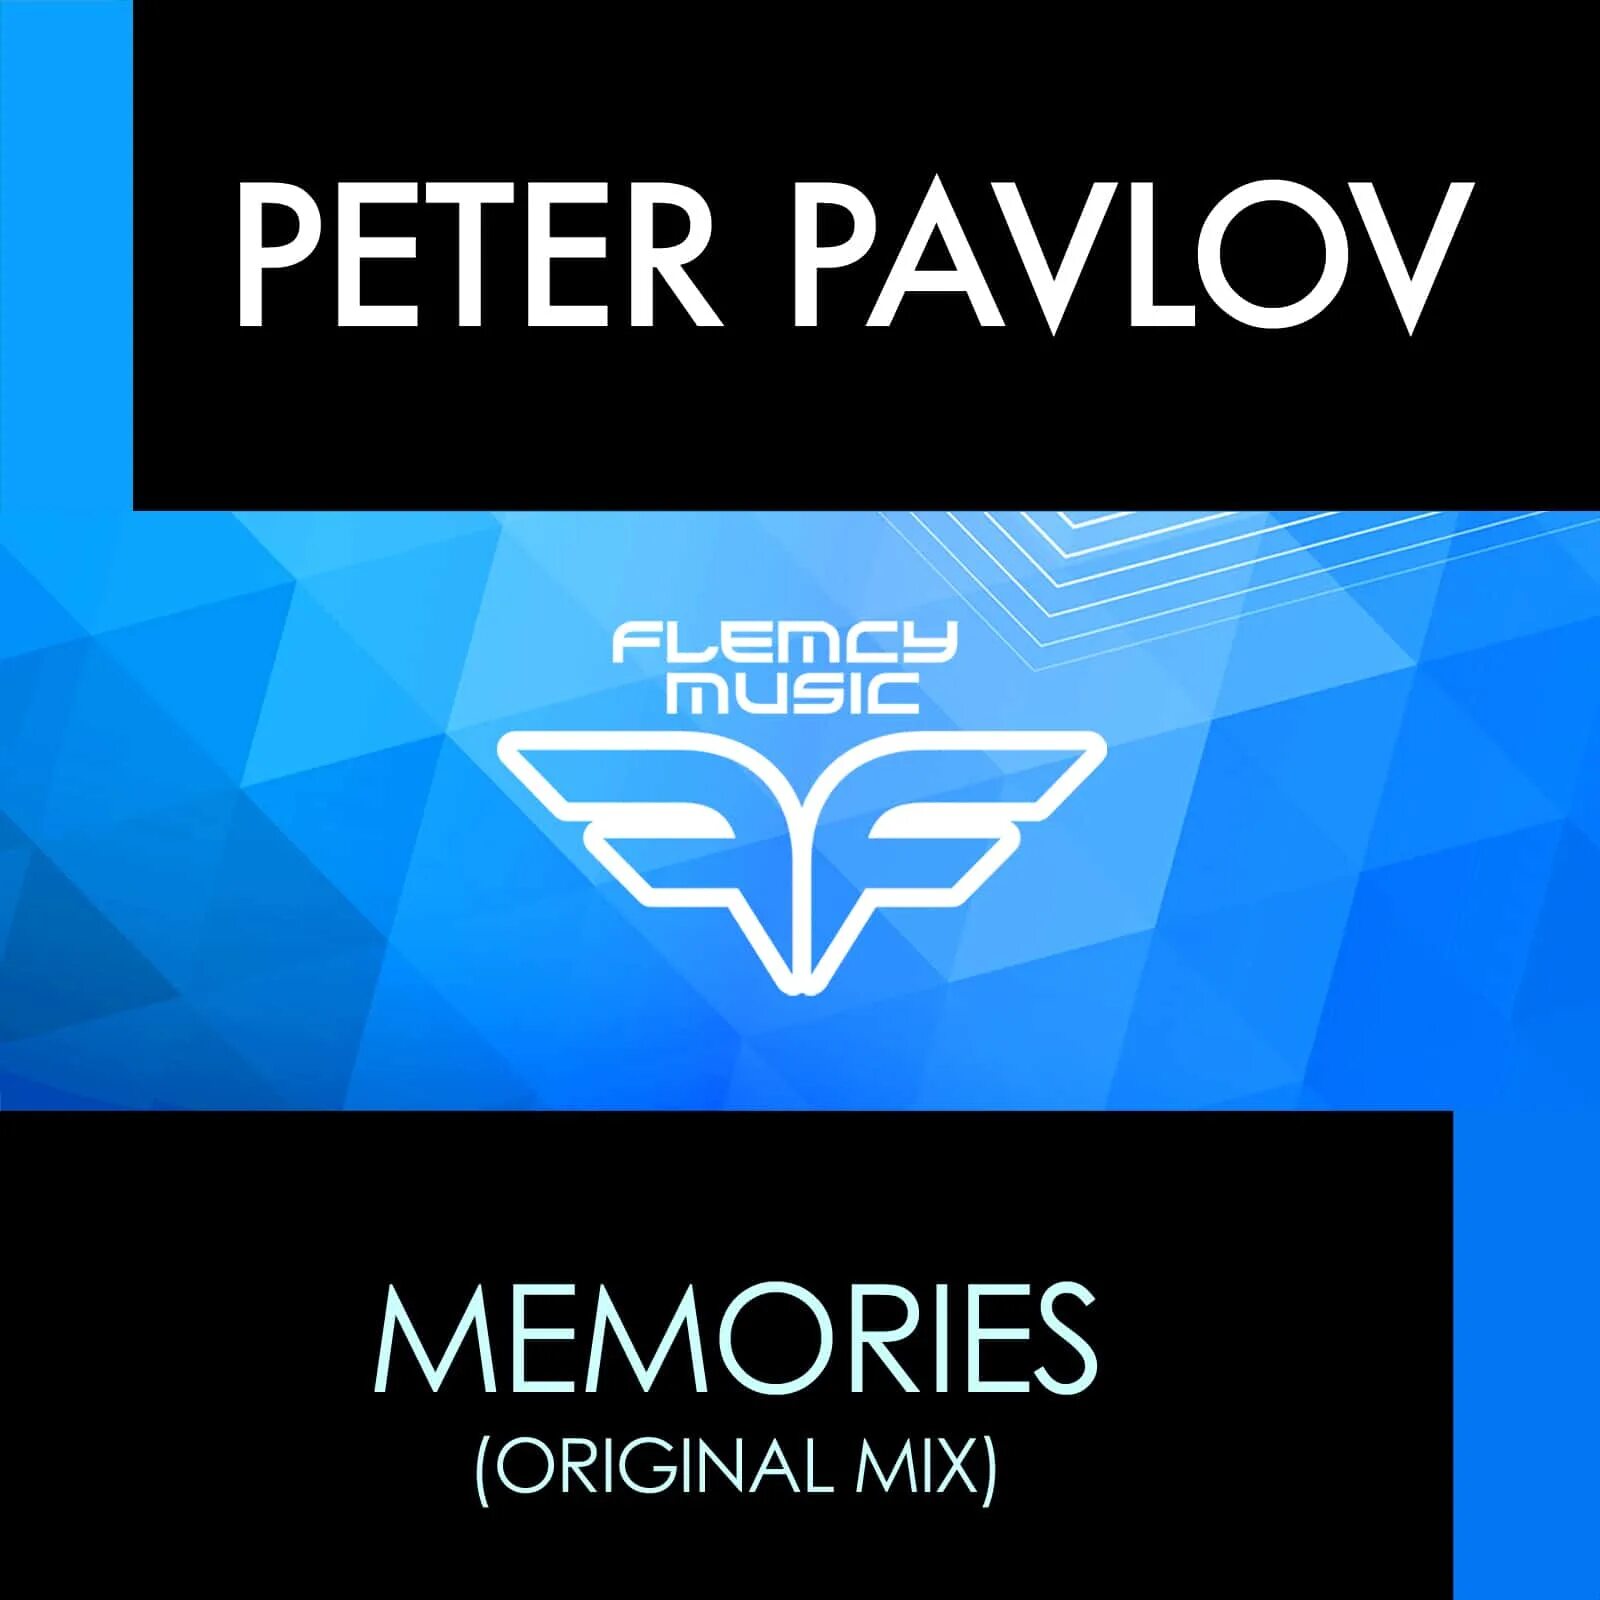 Оригинал Memories. Pavlov soundcloud. Ceas - Memories (Original Mix).